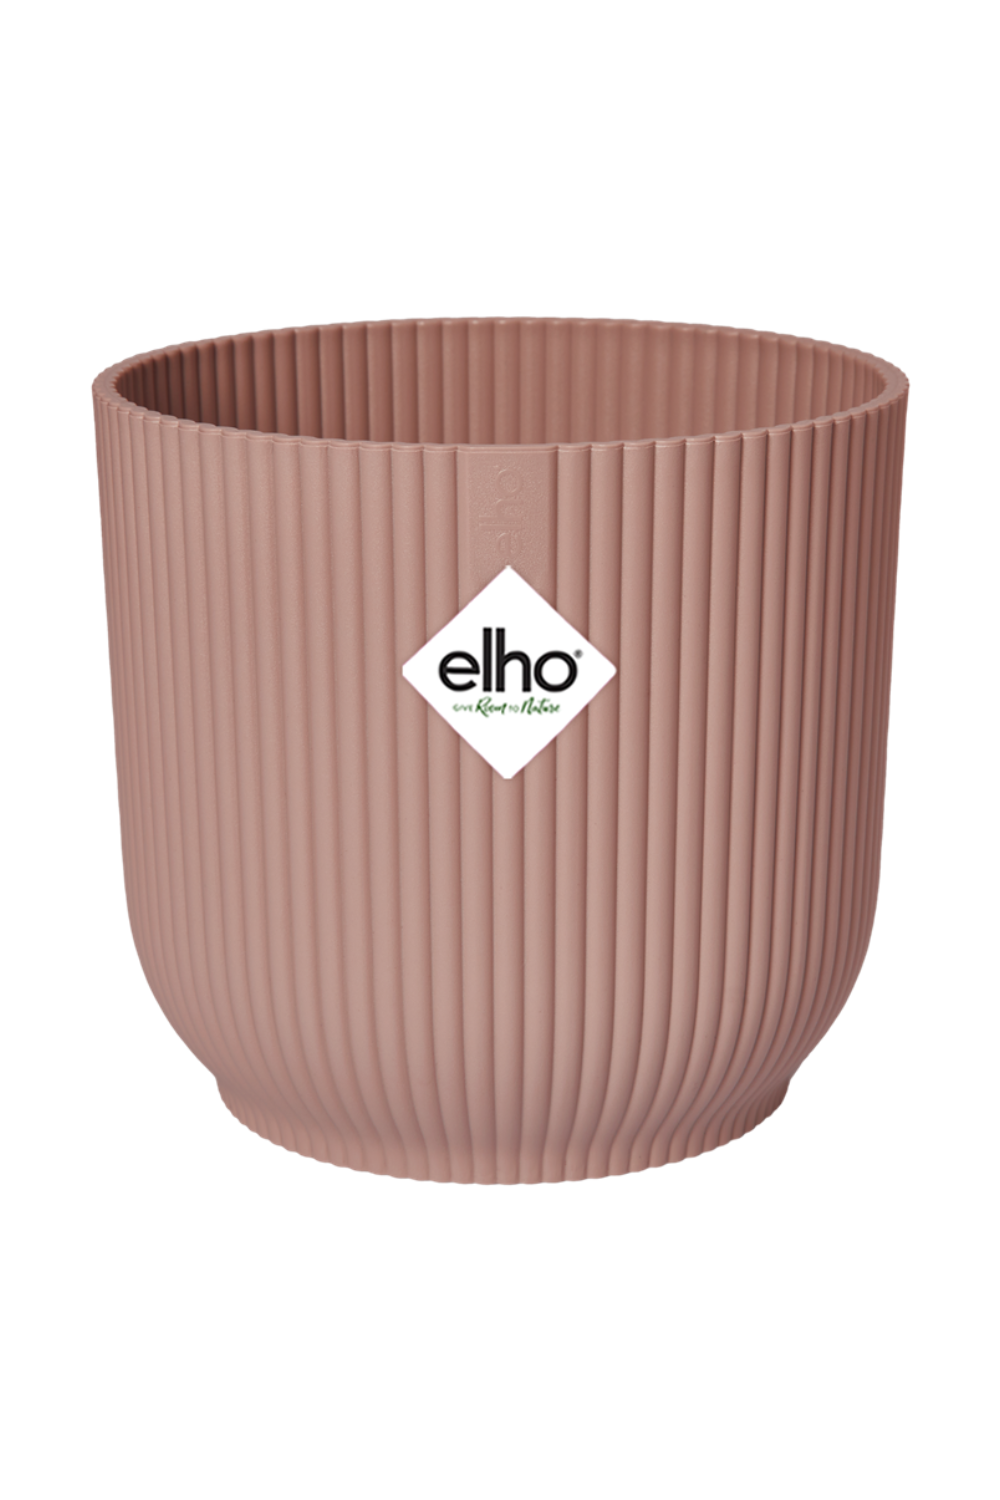 Blumentopf Elho Vibes Fold rund Delicate Pink 14cm